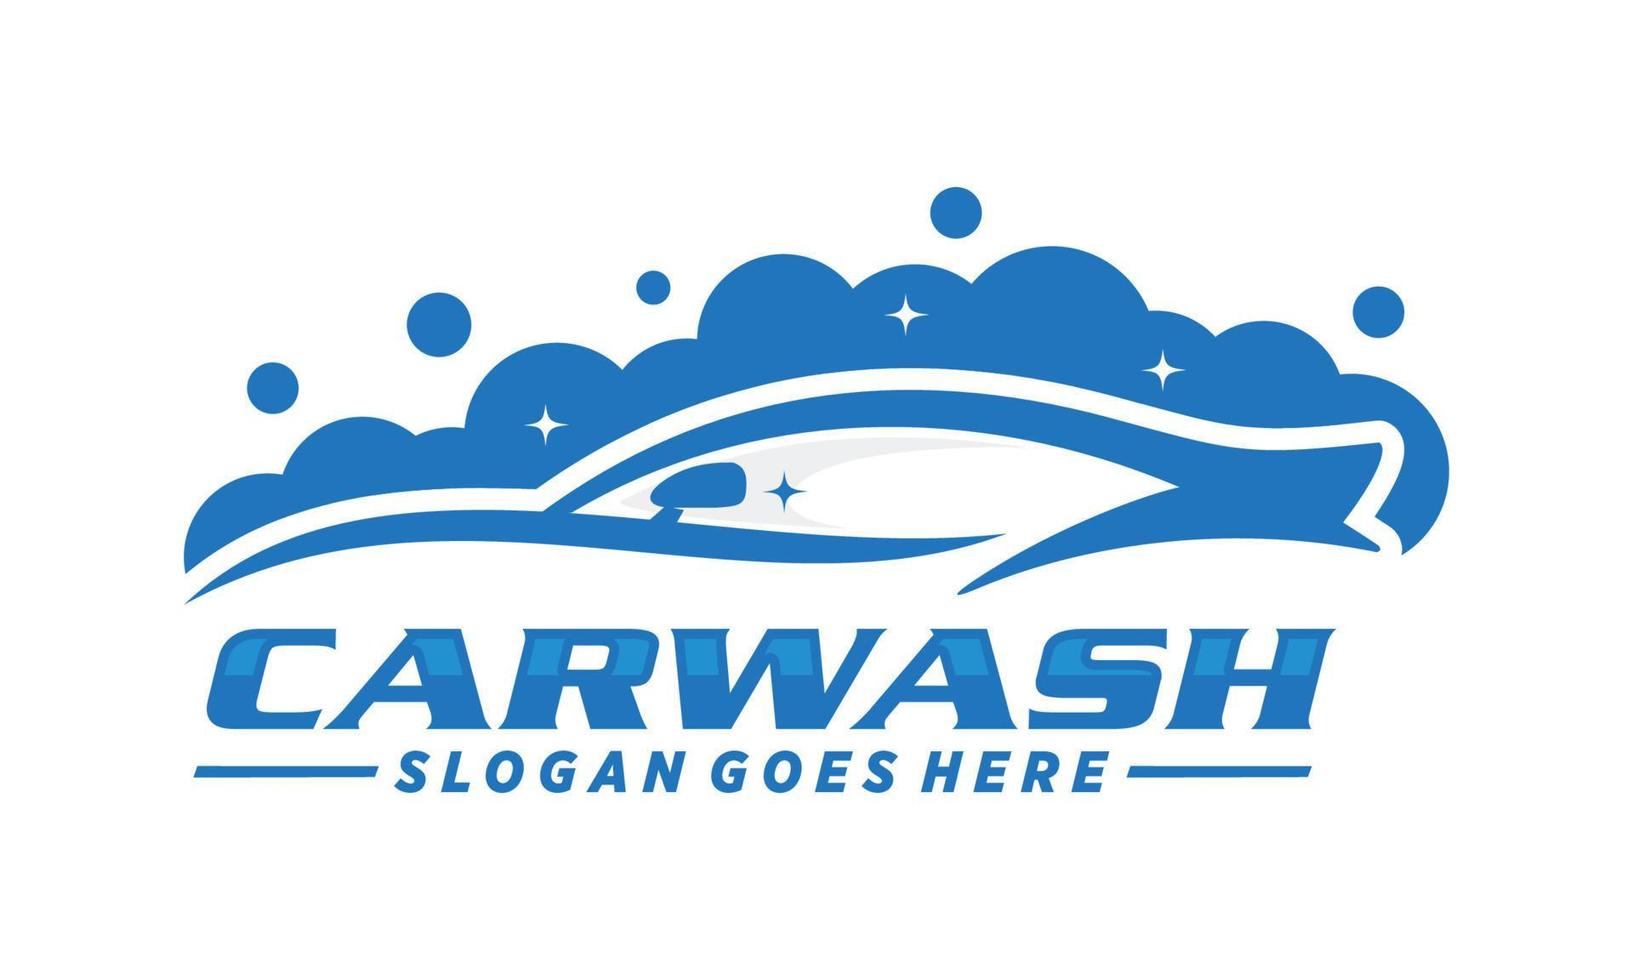 Car wash logo design vector